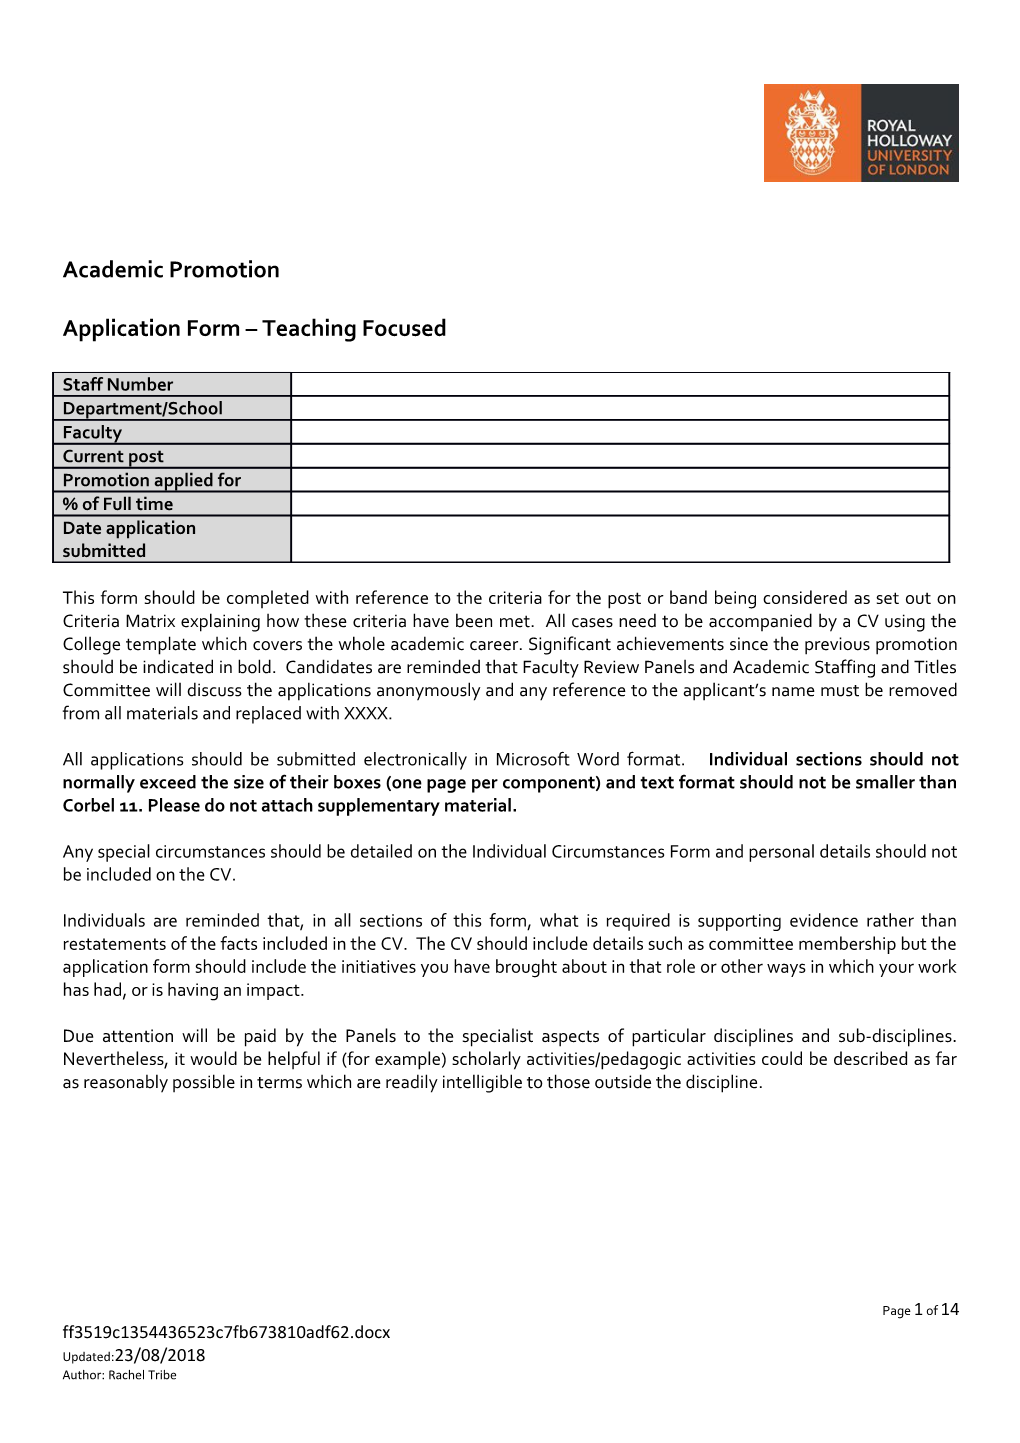 Form 1 - Academic Promotion